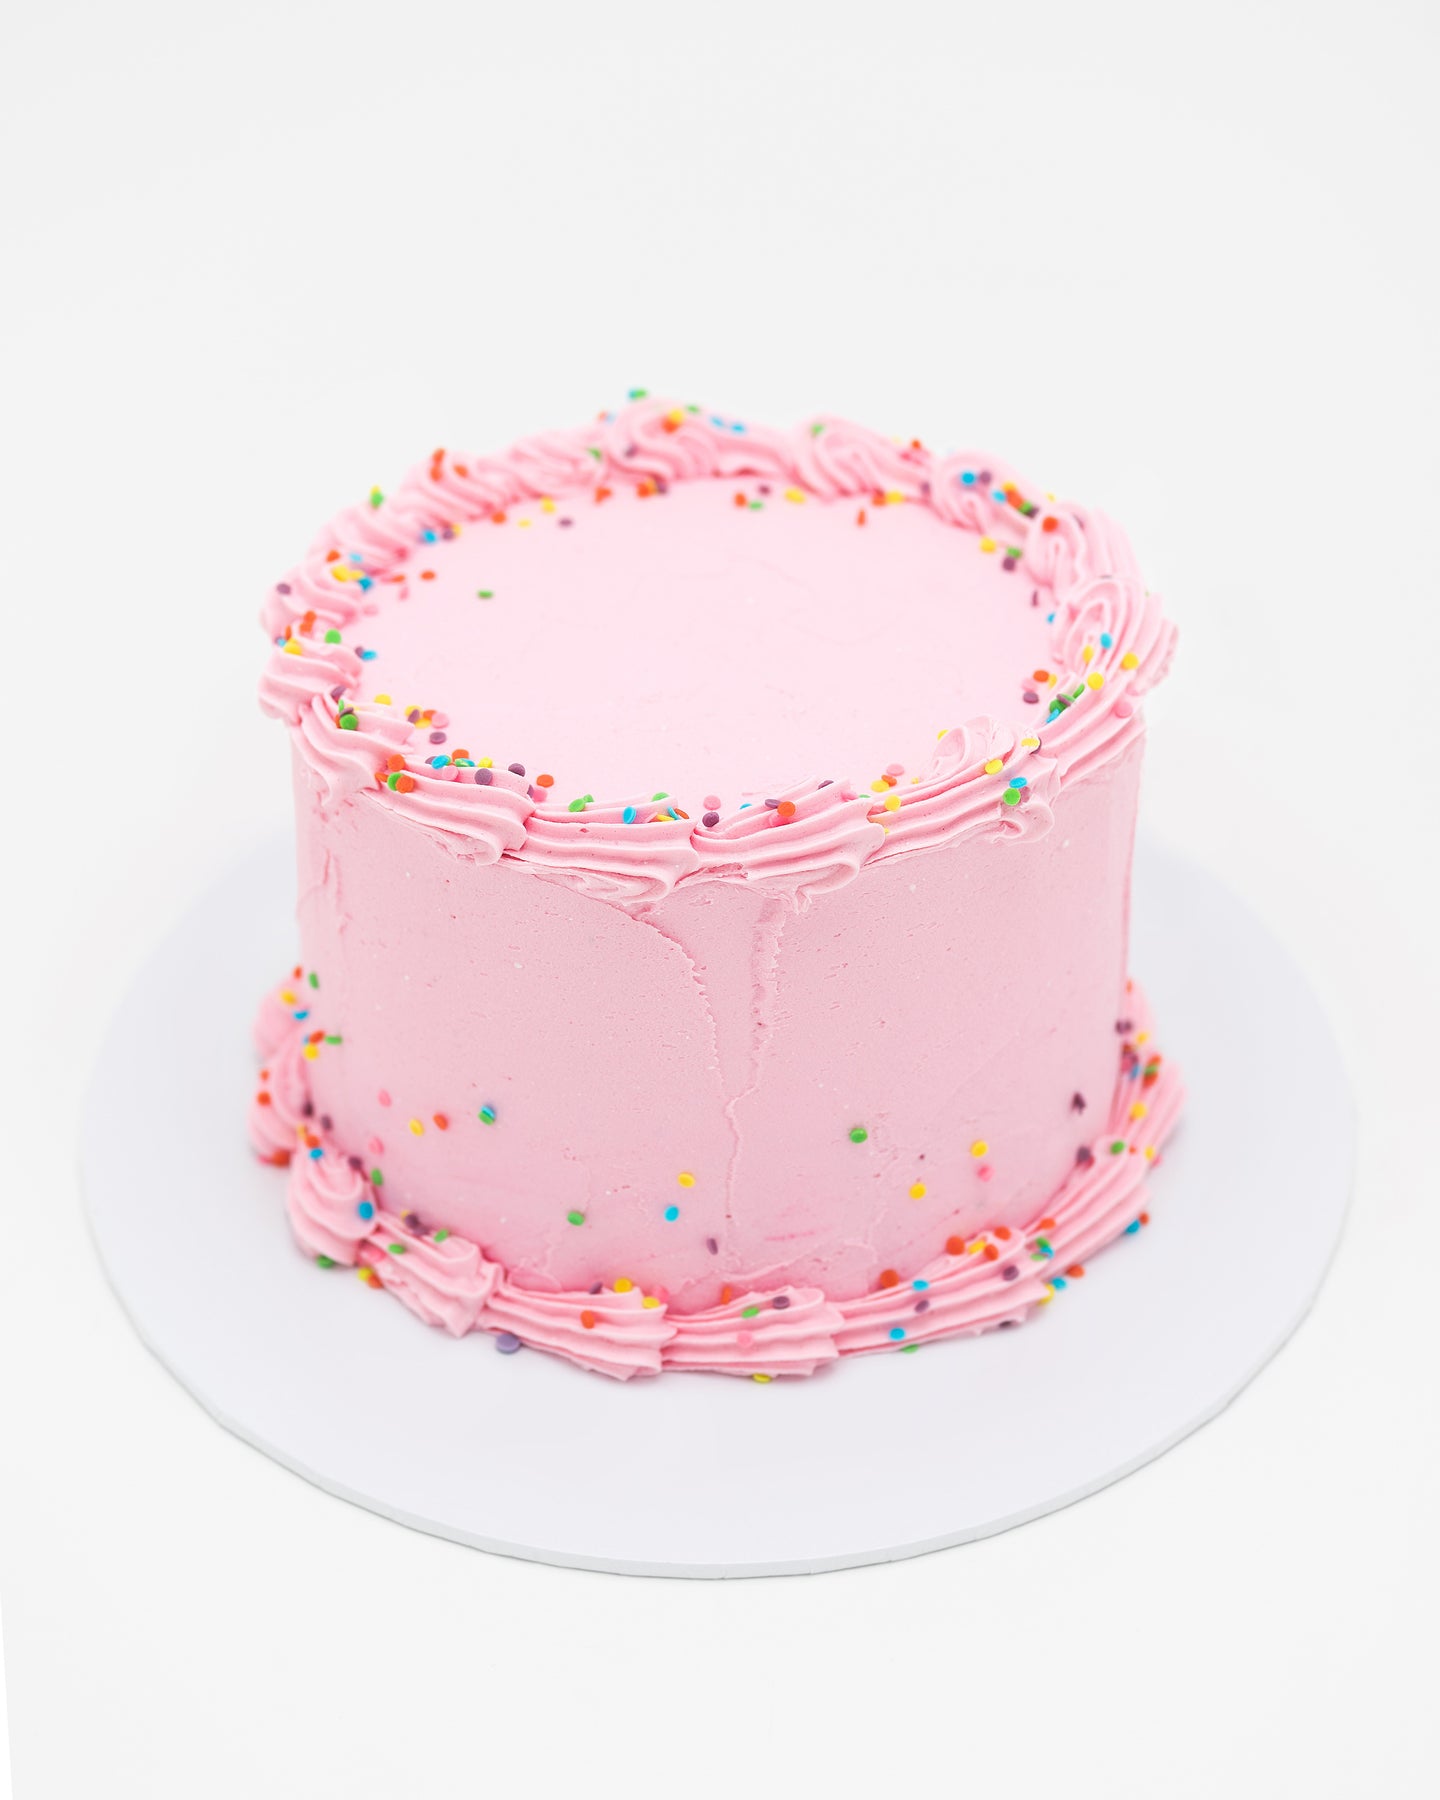 Cake Design Ideas for Men - Sweet Shoppe Mom | Phoenix Lifestyle Blog